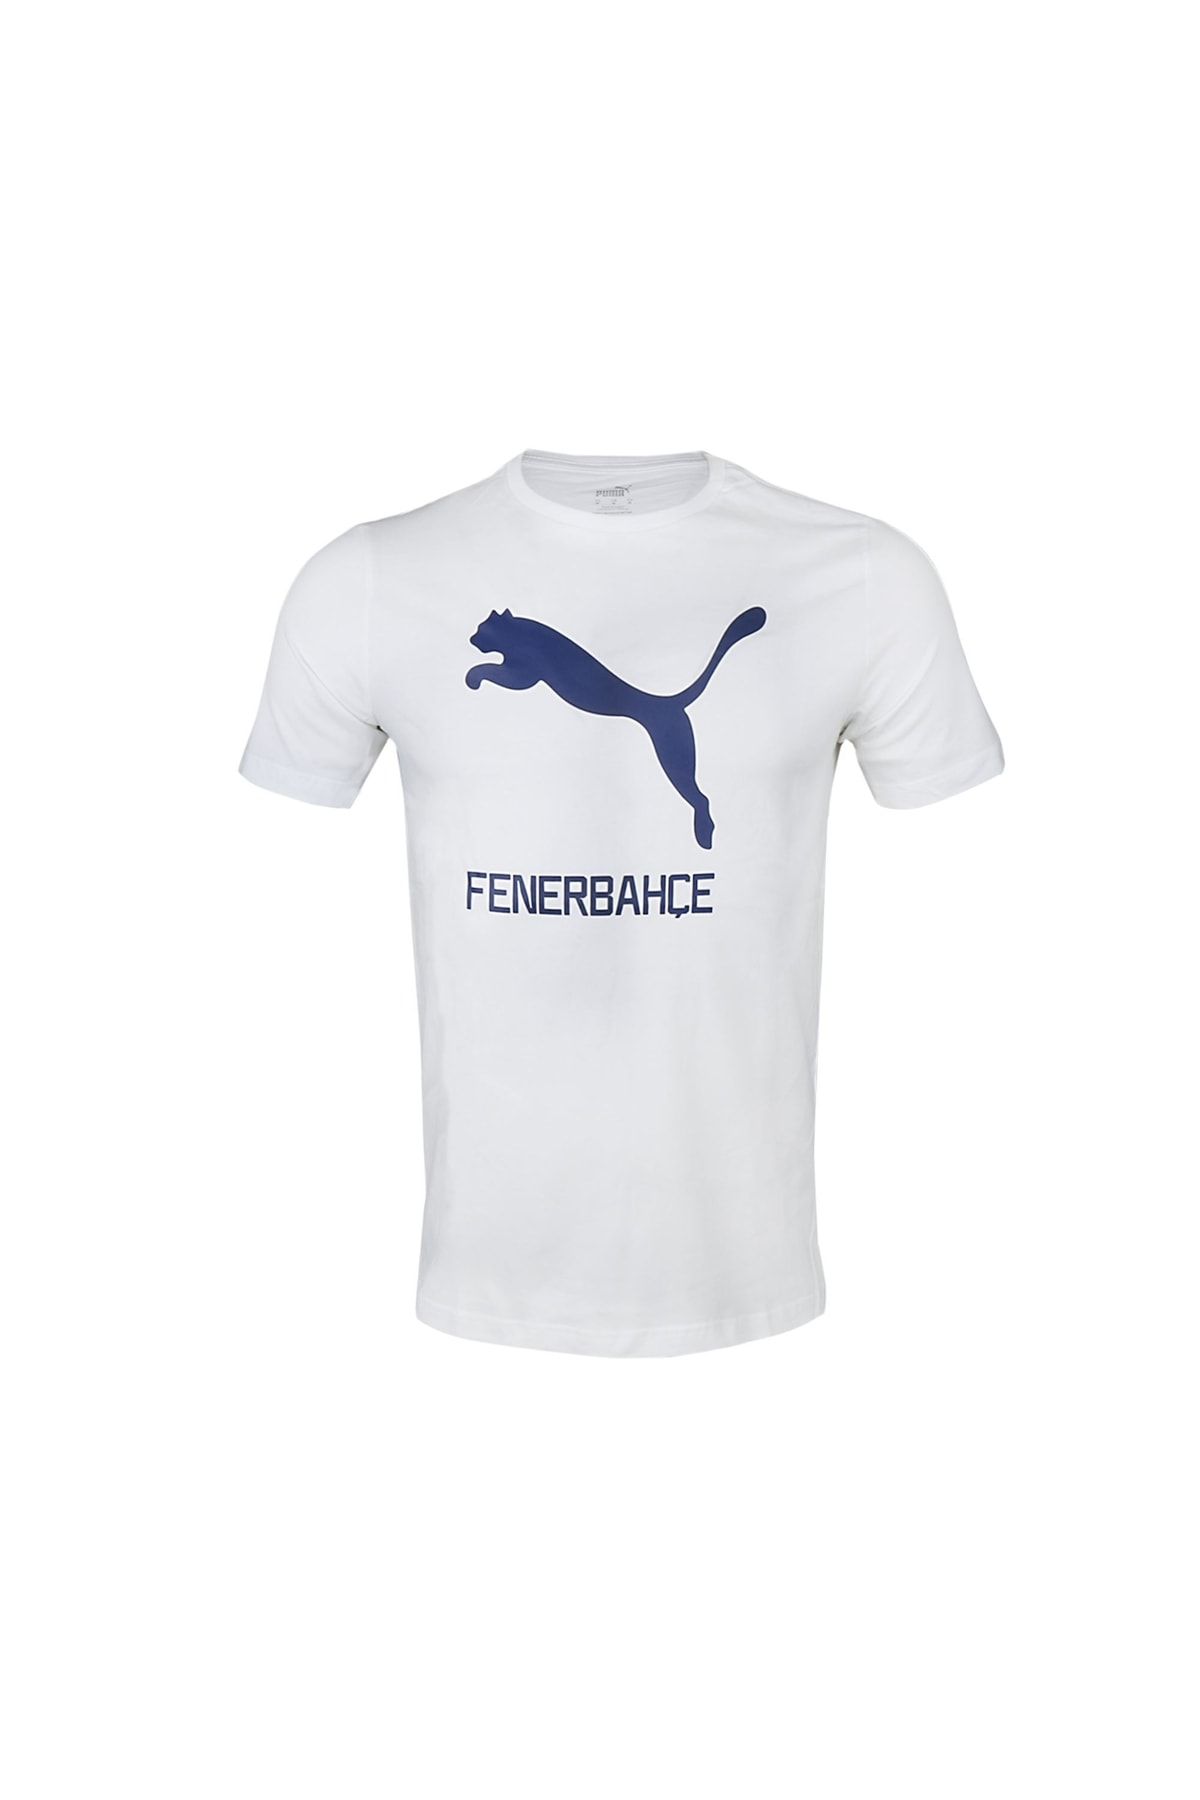 Puma Fenerbahçe Cat Tee Erkek Fenerbahçe Futbol  Forma 77313602 Beyaz